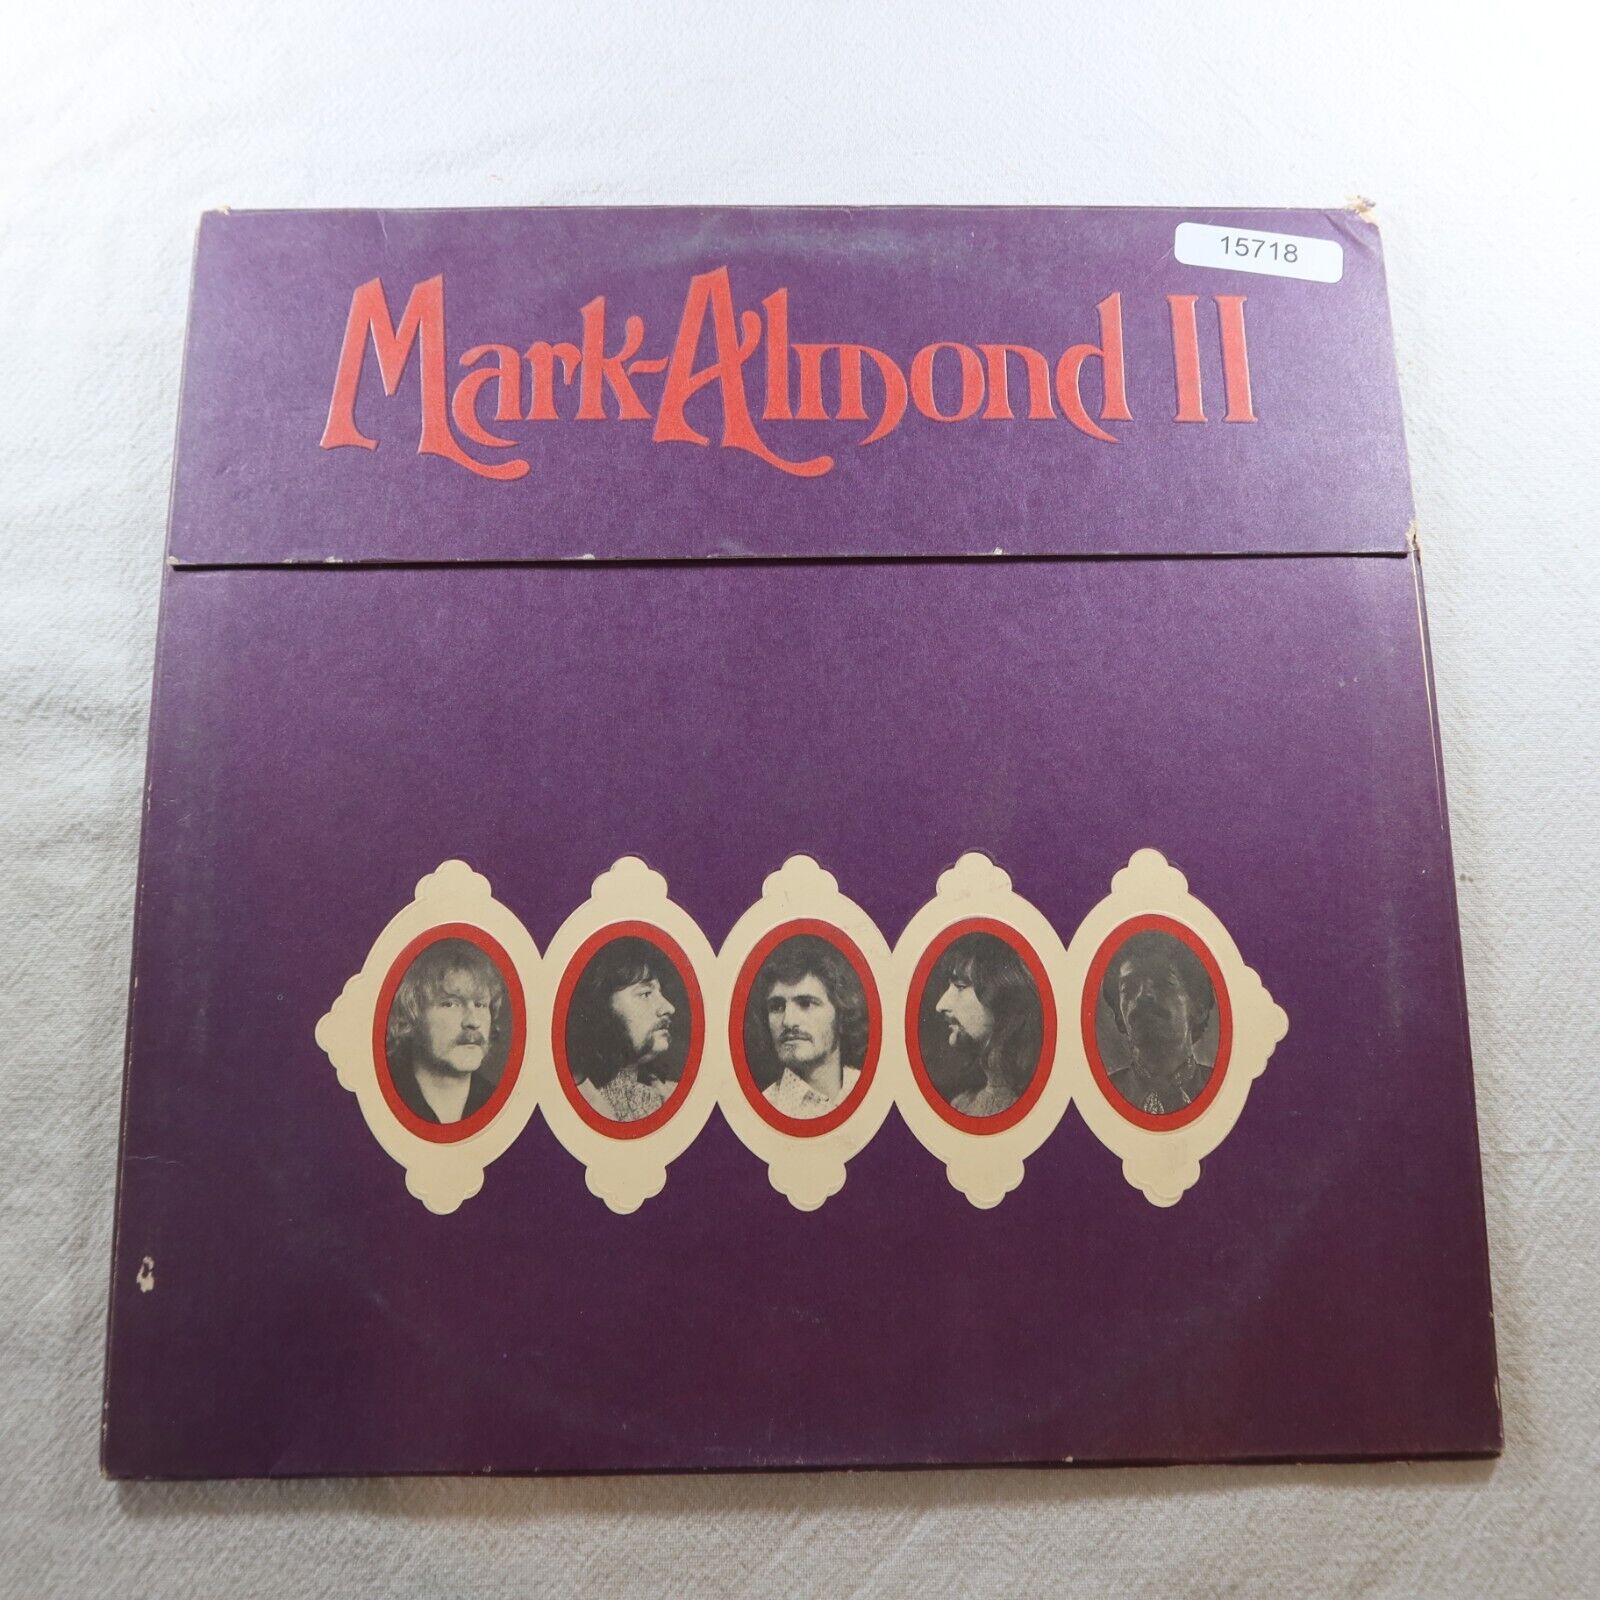 Mark Almond Ii Blue Thumb 32 Record Album Vinyl LP